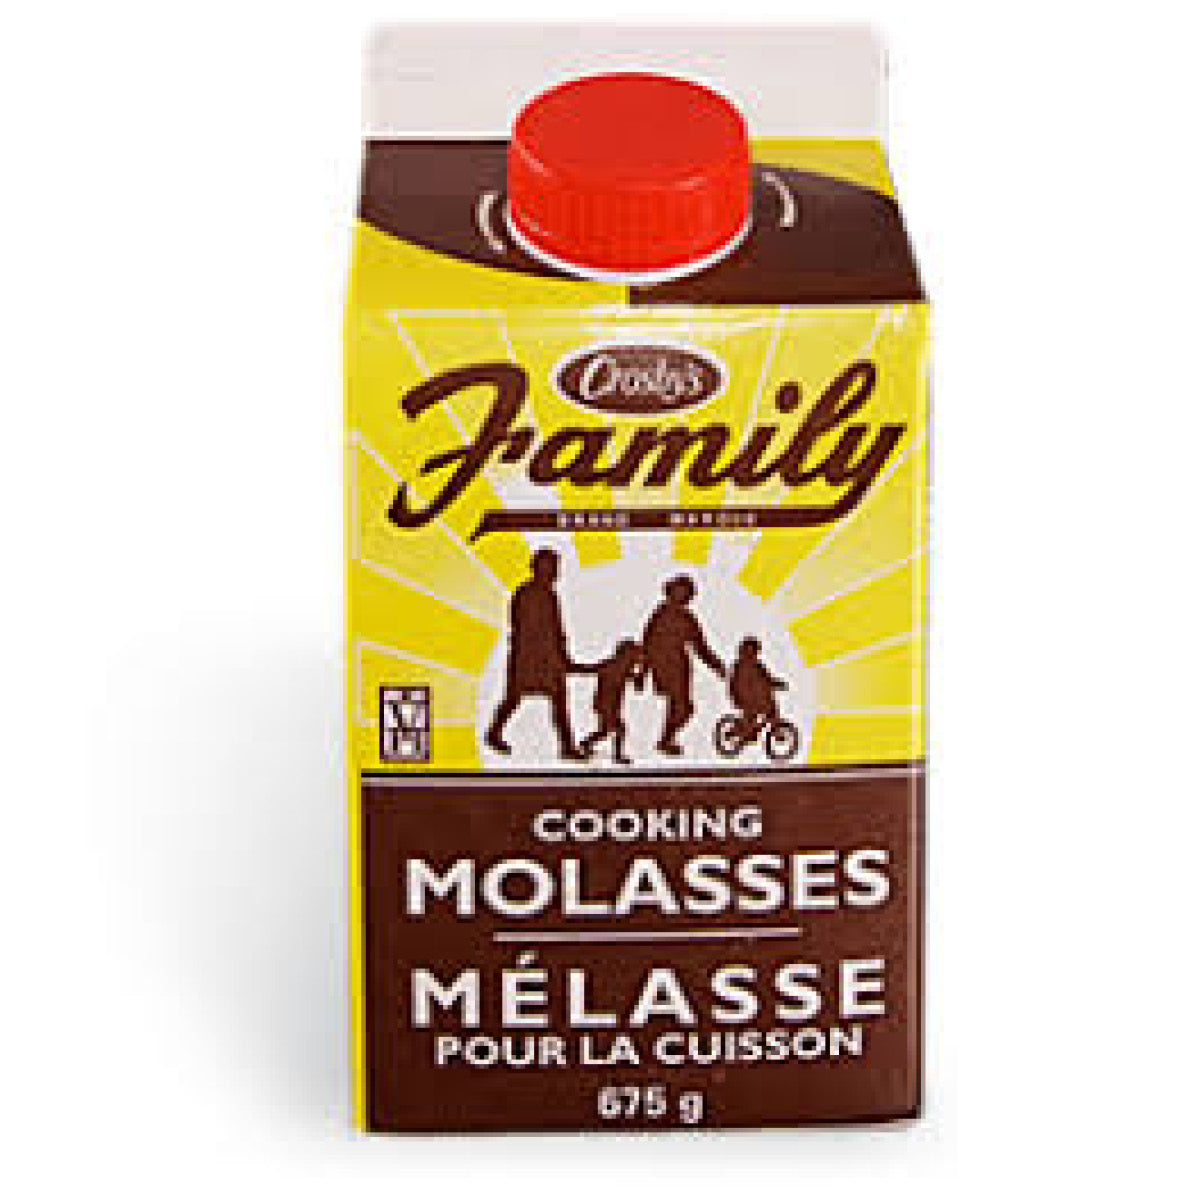 Crosby Family Molasses, 675g